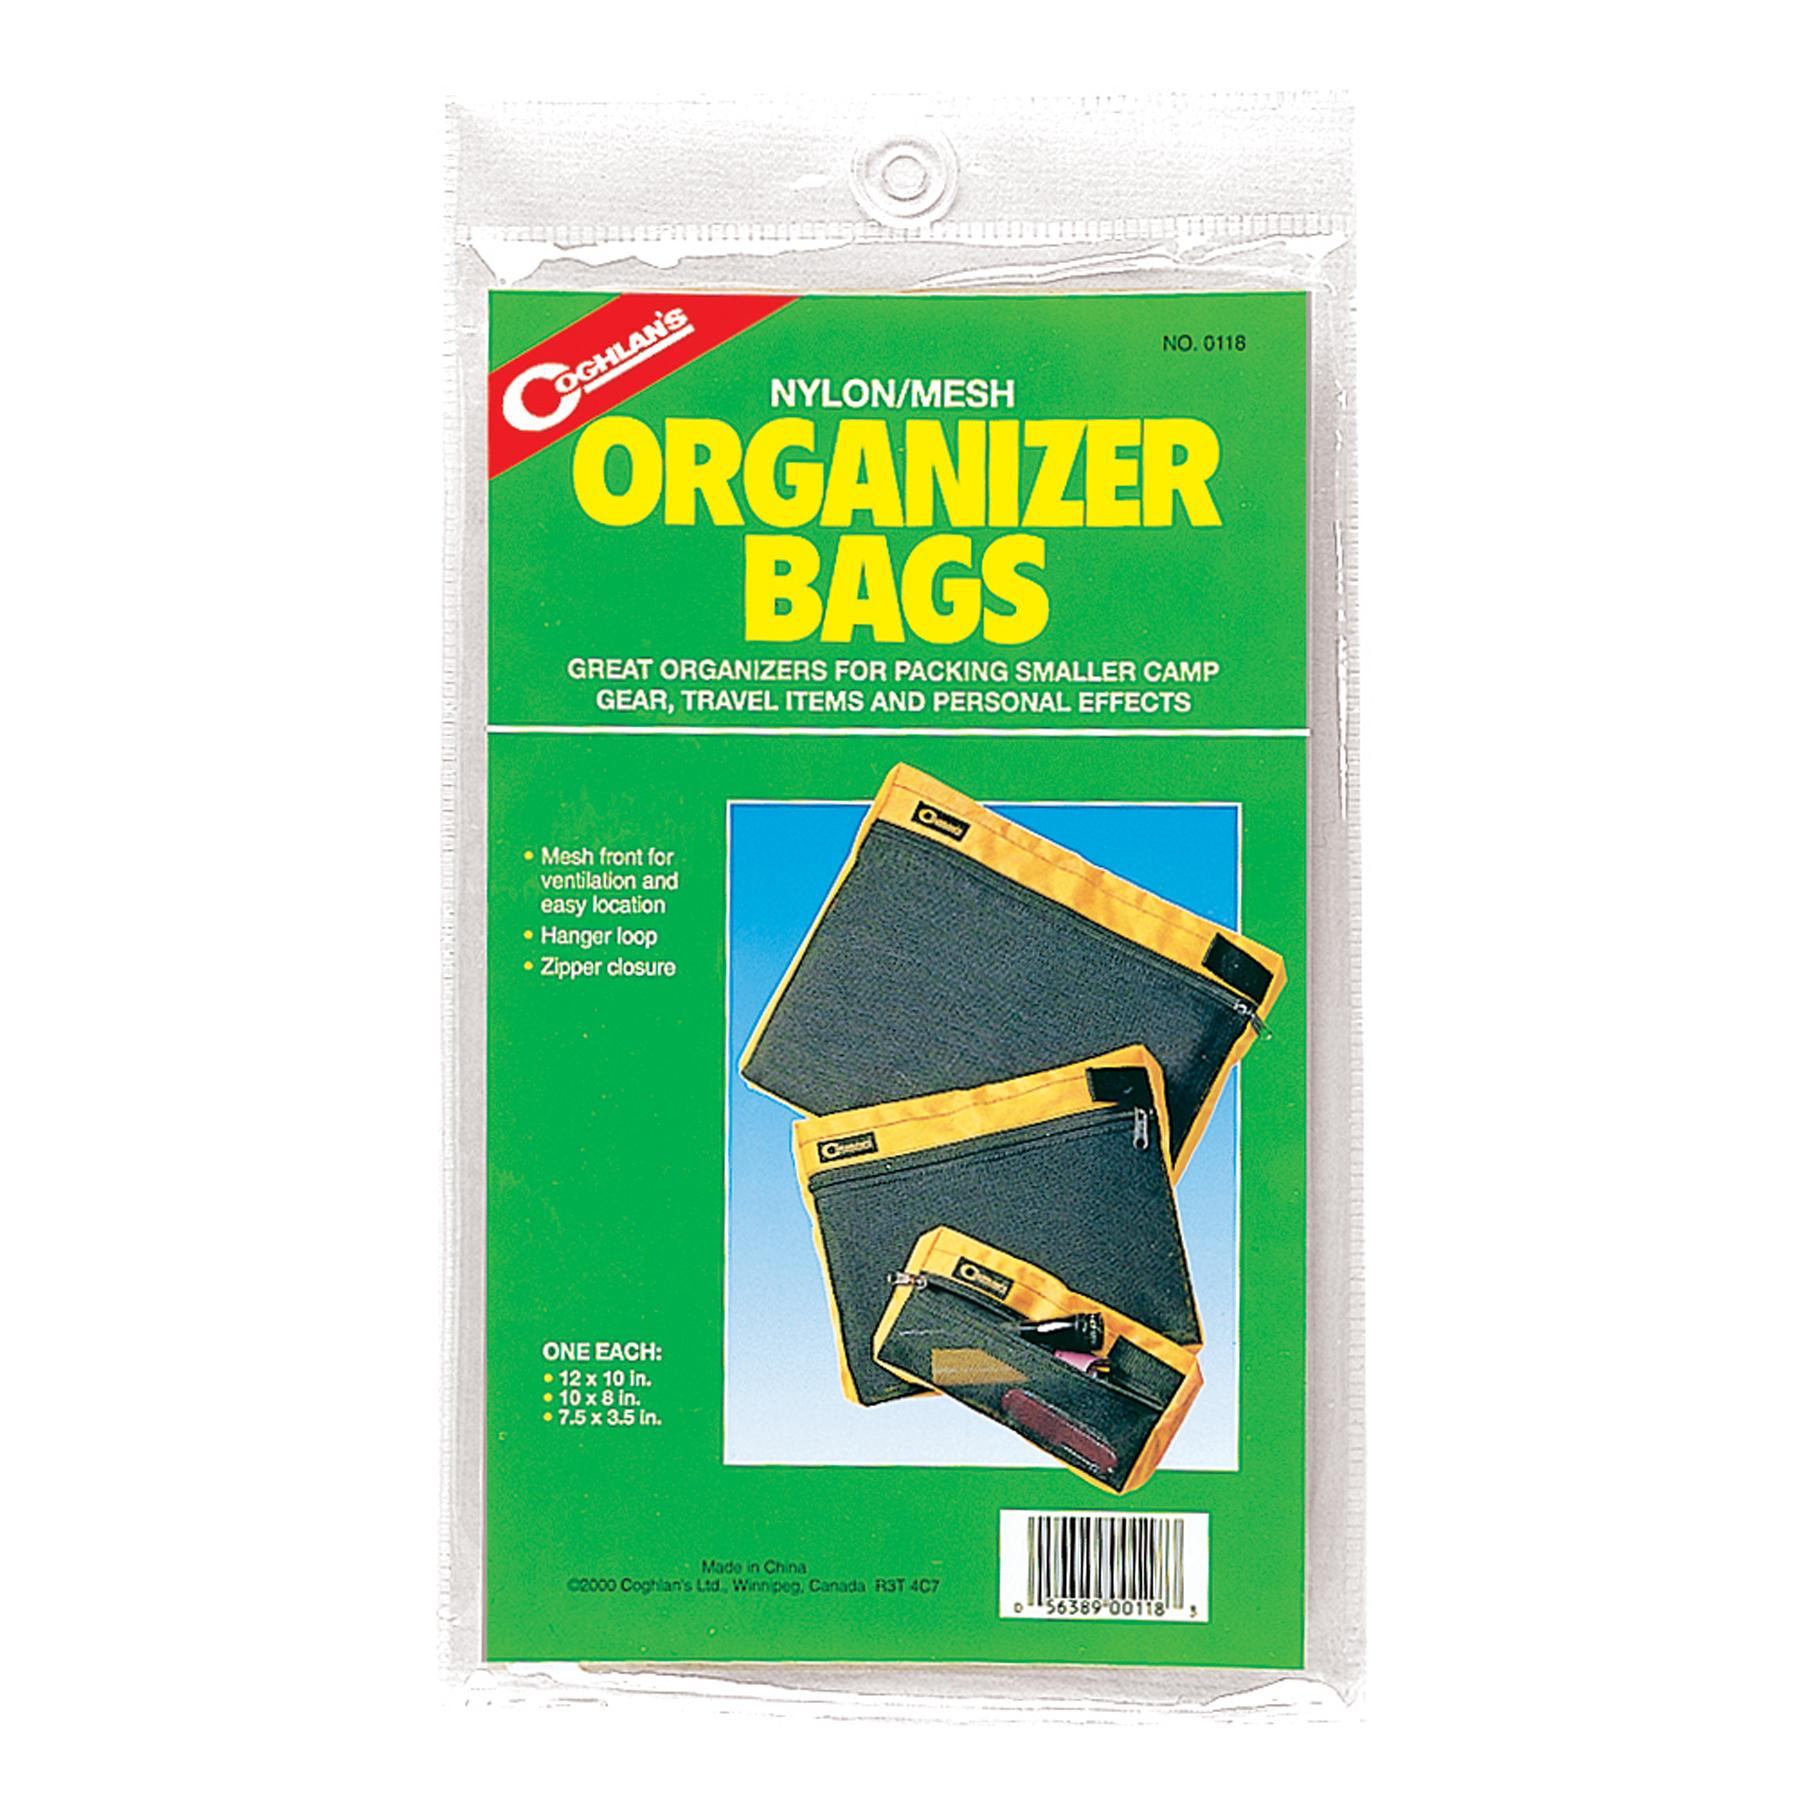  Organizer Bags